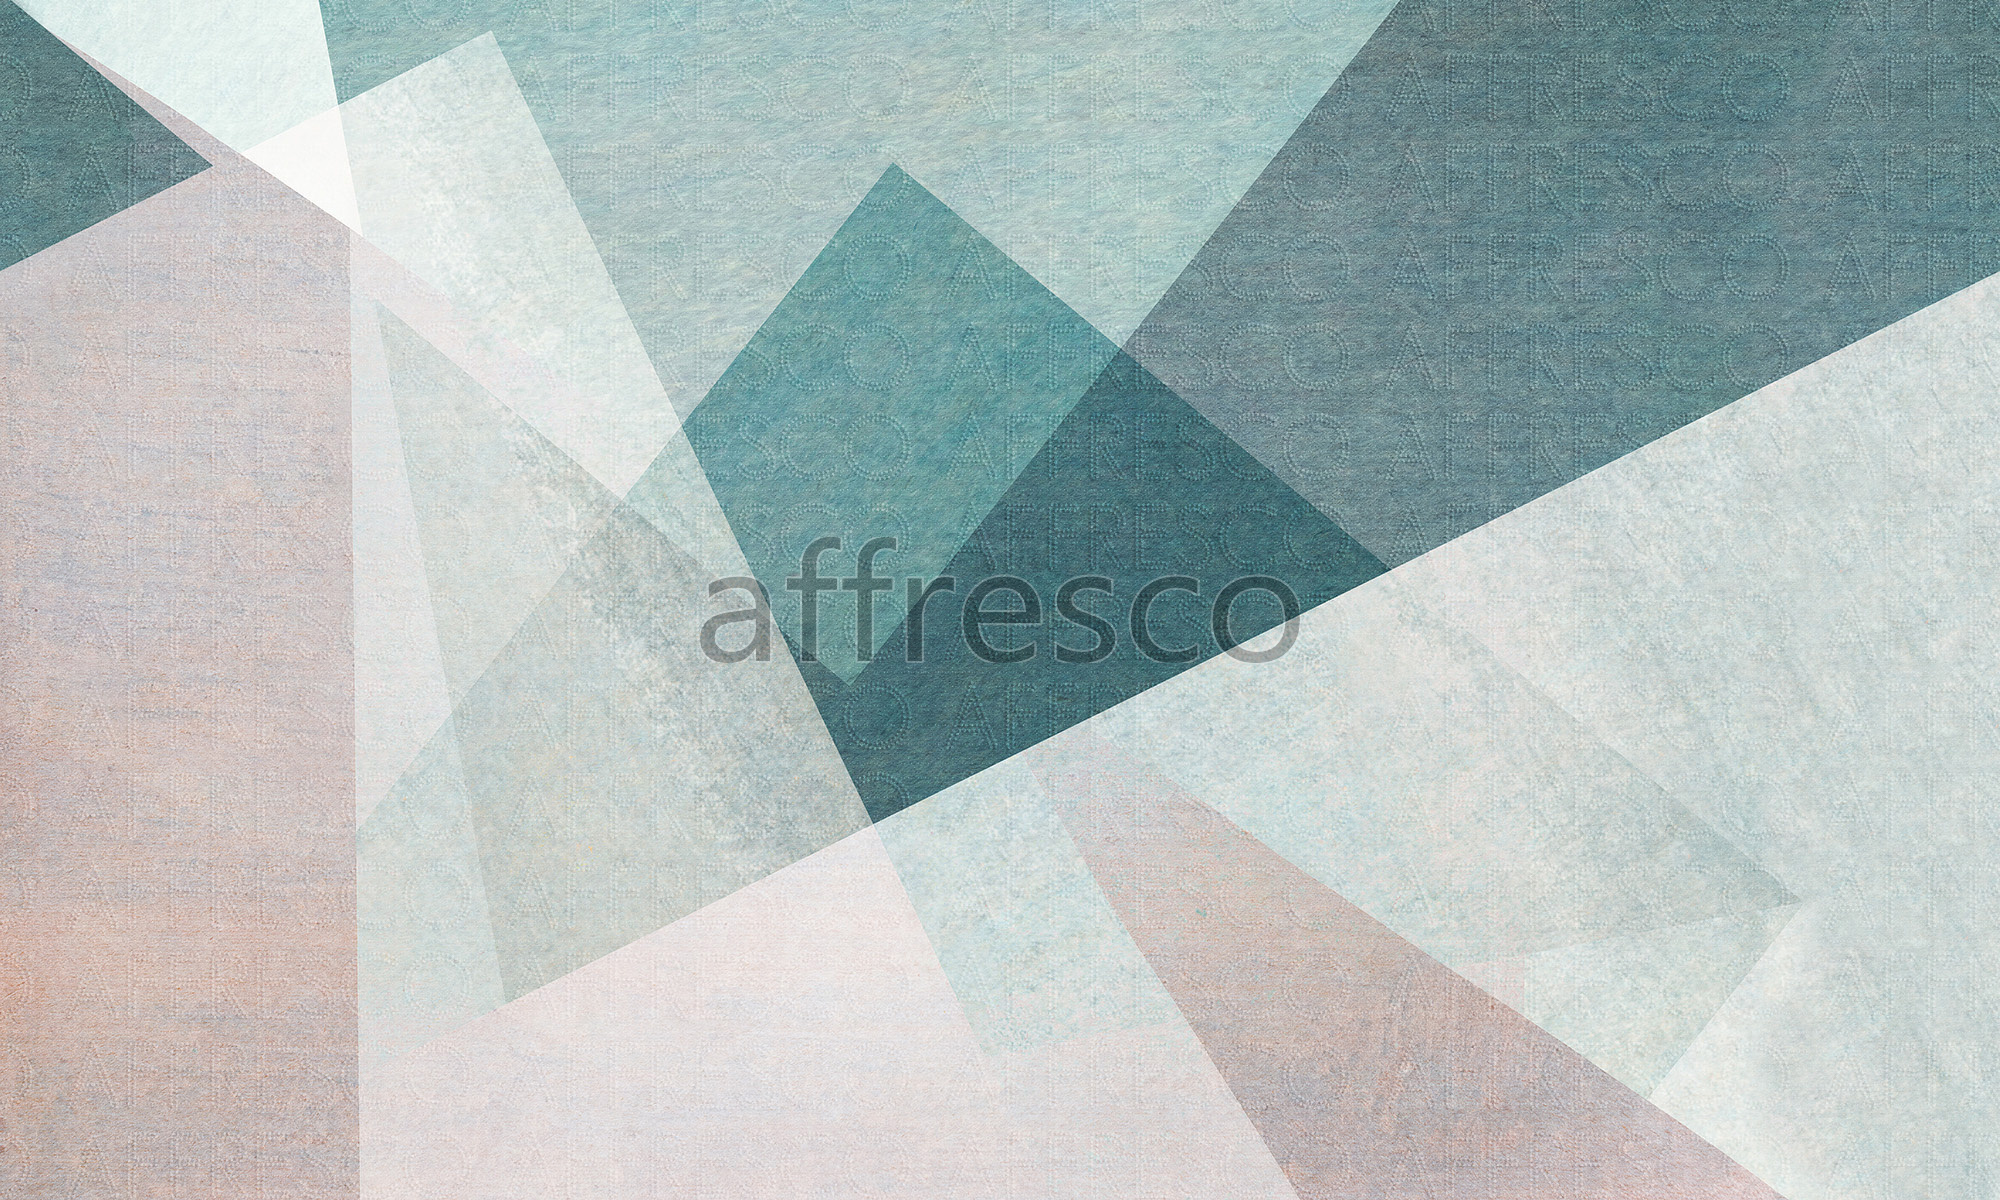 RE807-COL1 | Fine Art | Affresco Factory